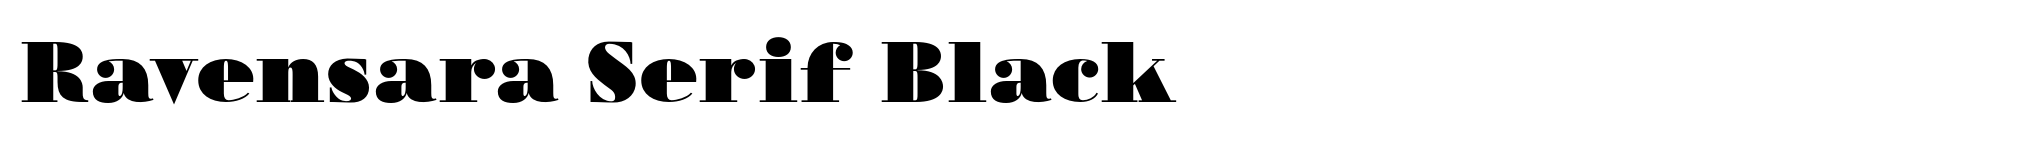 Ravensara Serif Black image